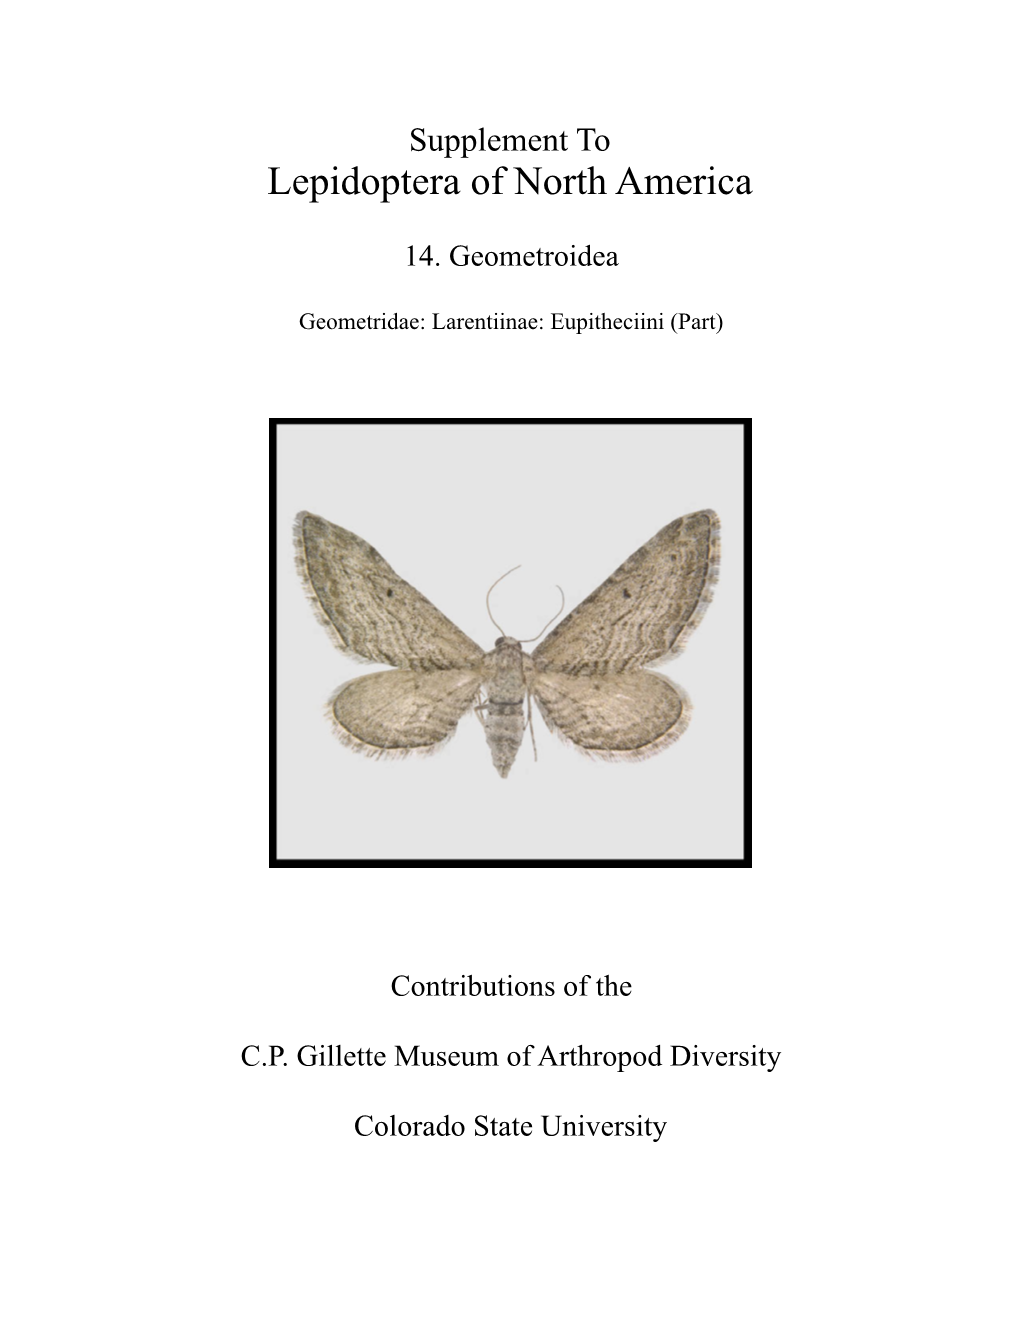 Lepidoptera of North America